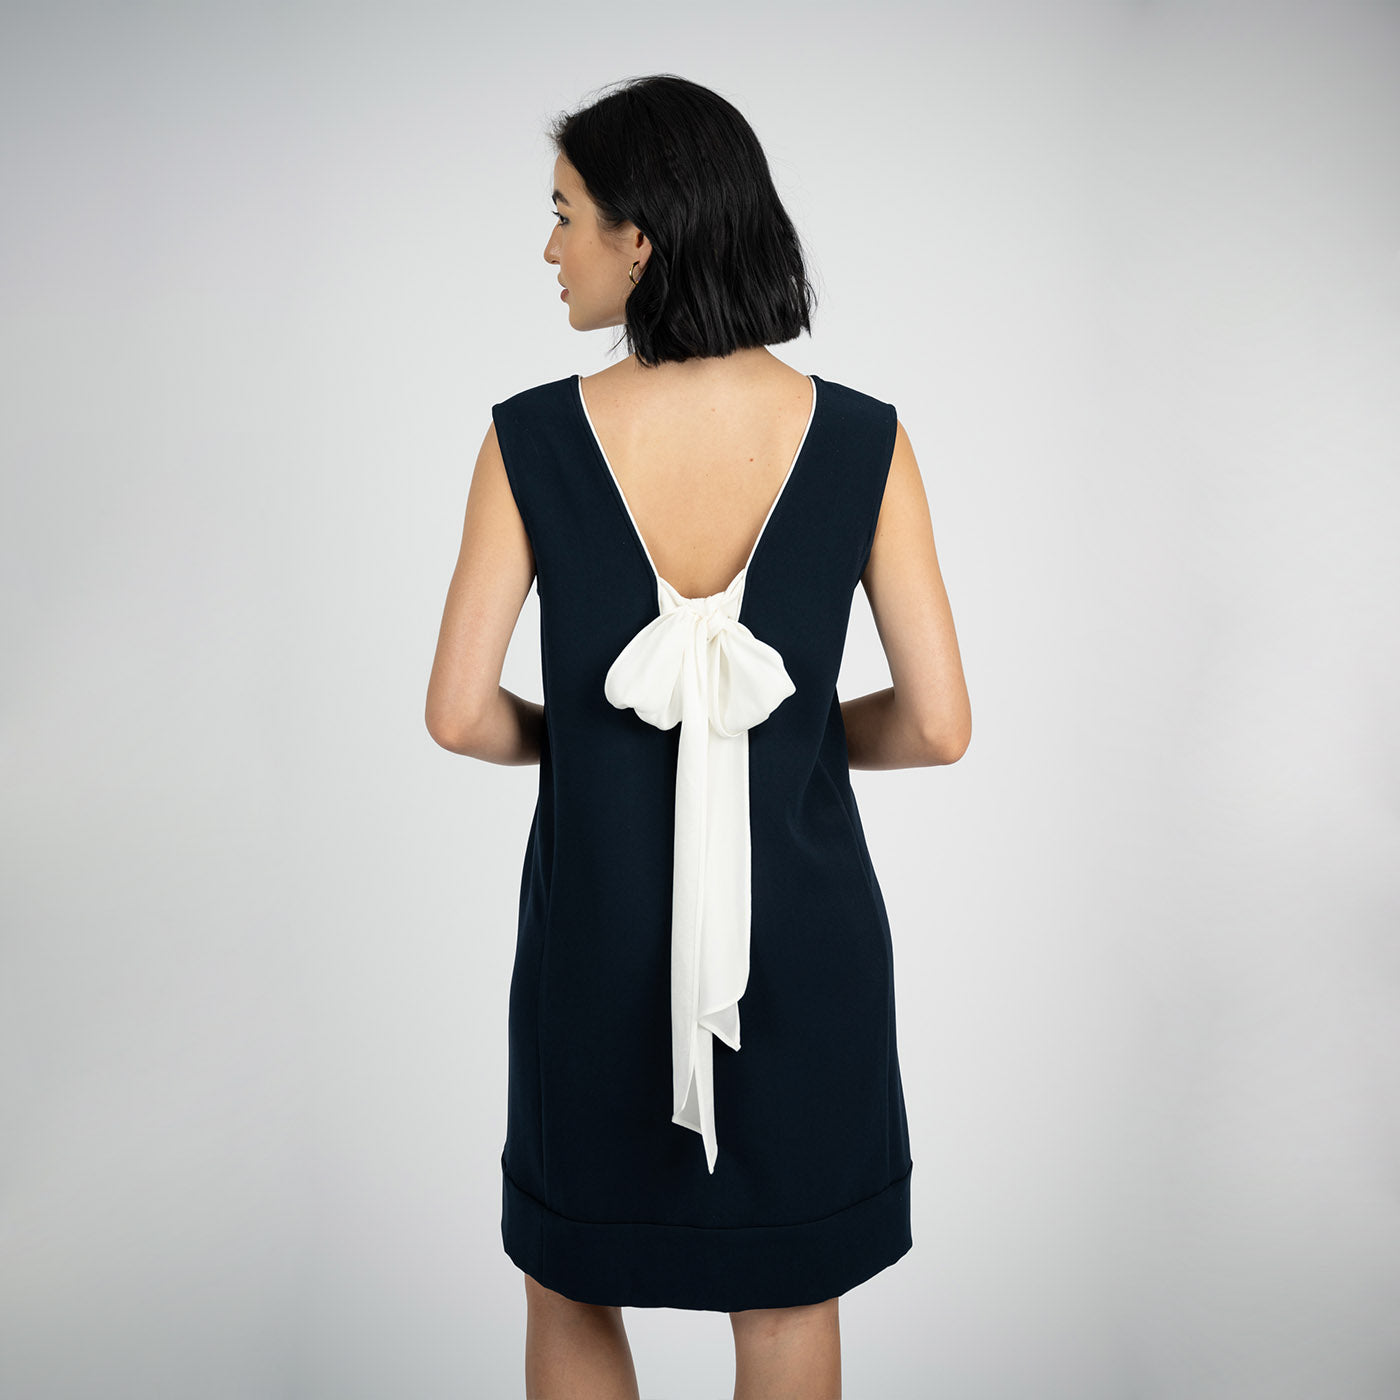 "Lauren” Acetate Sleeveless Mini Dress with a Bow